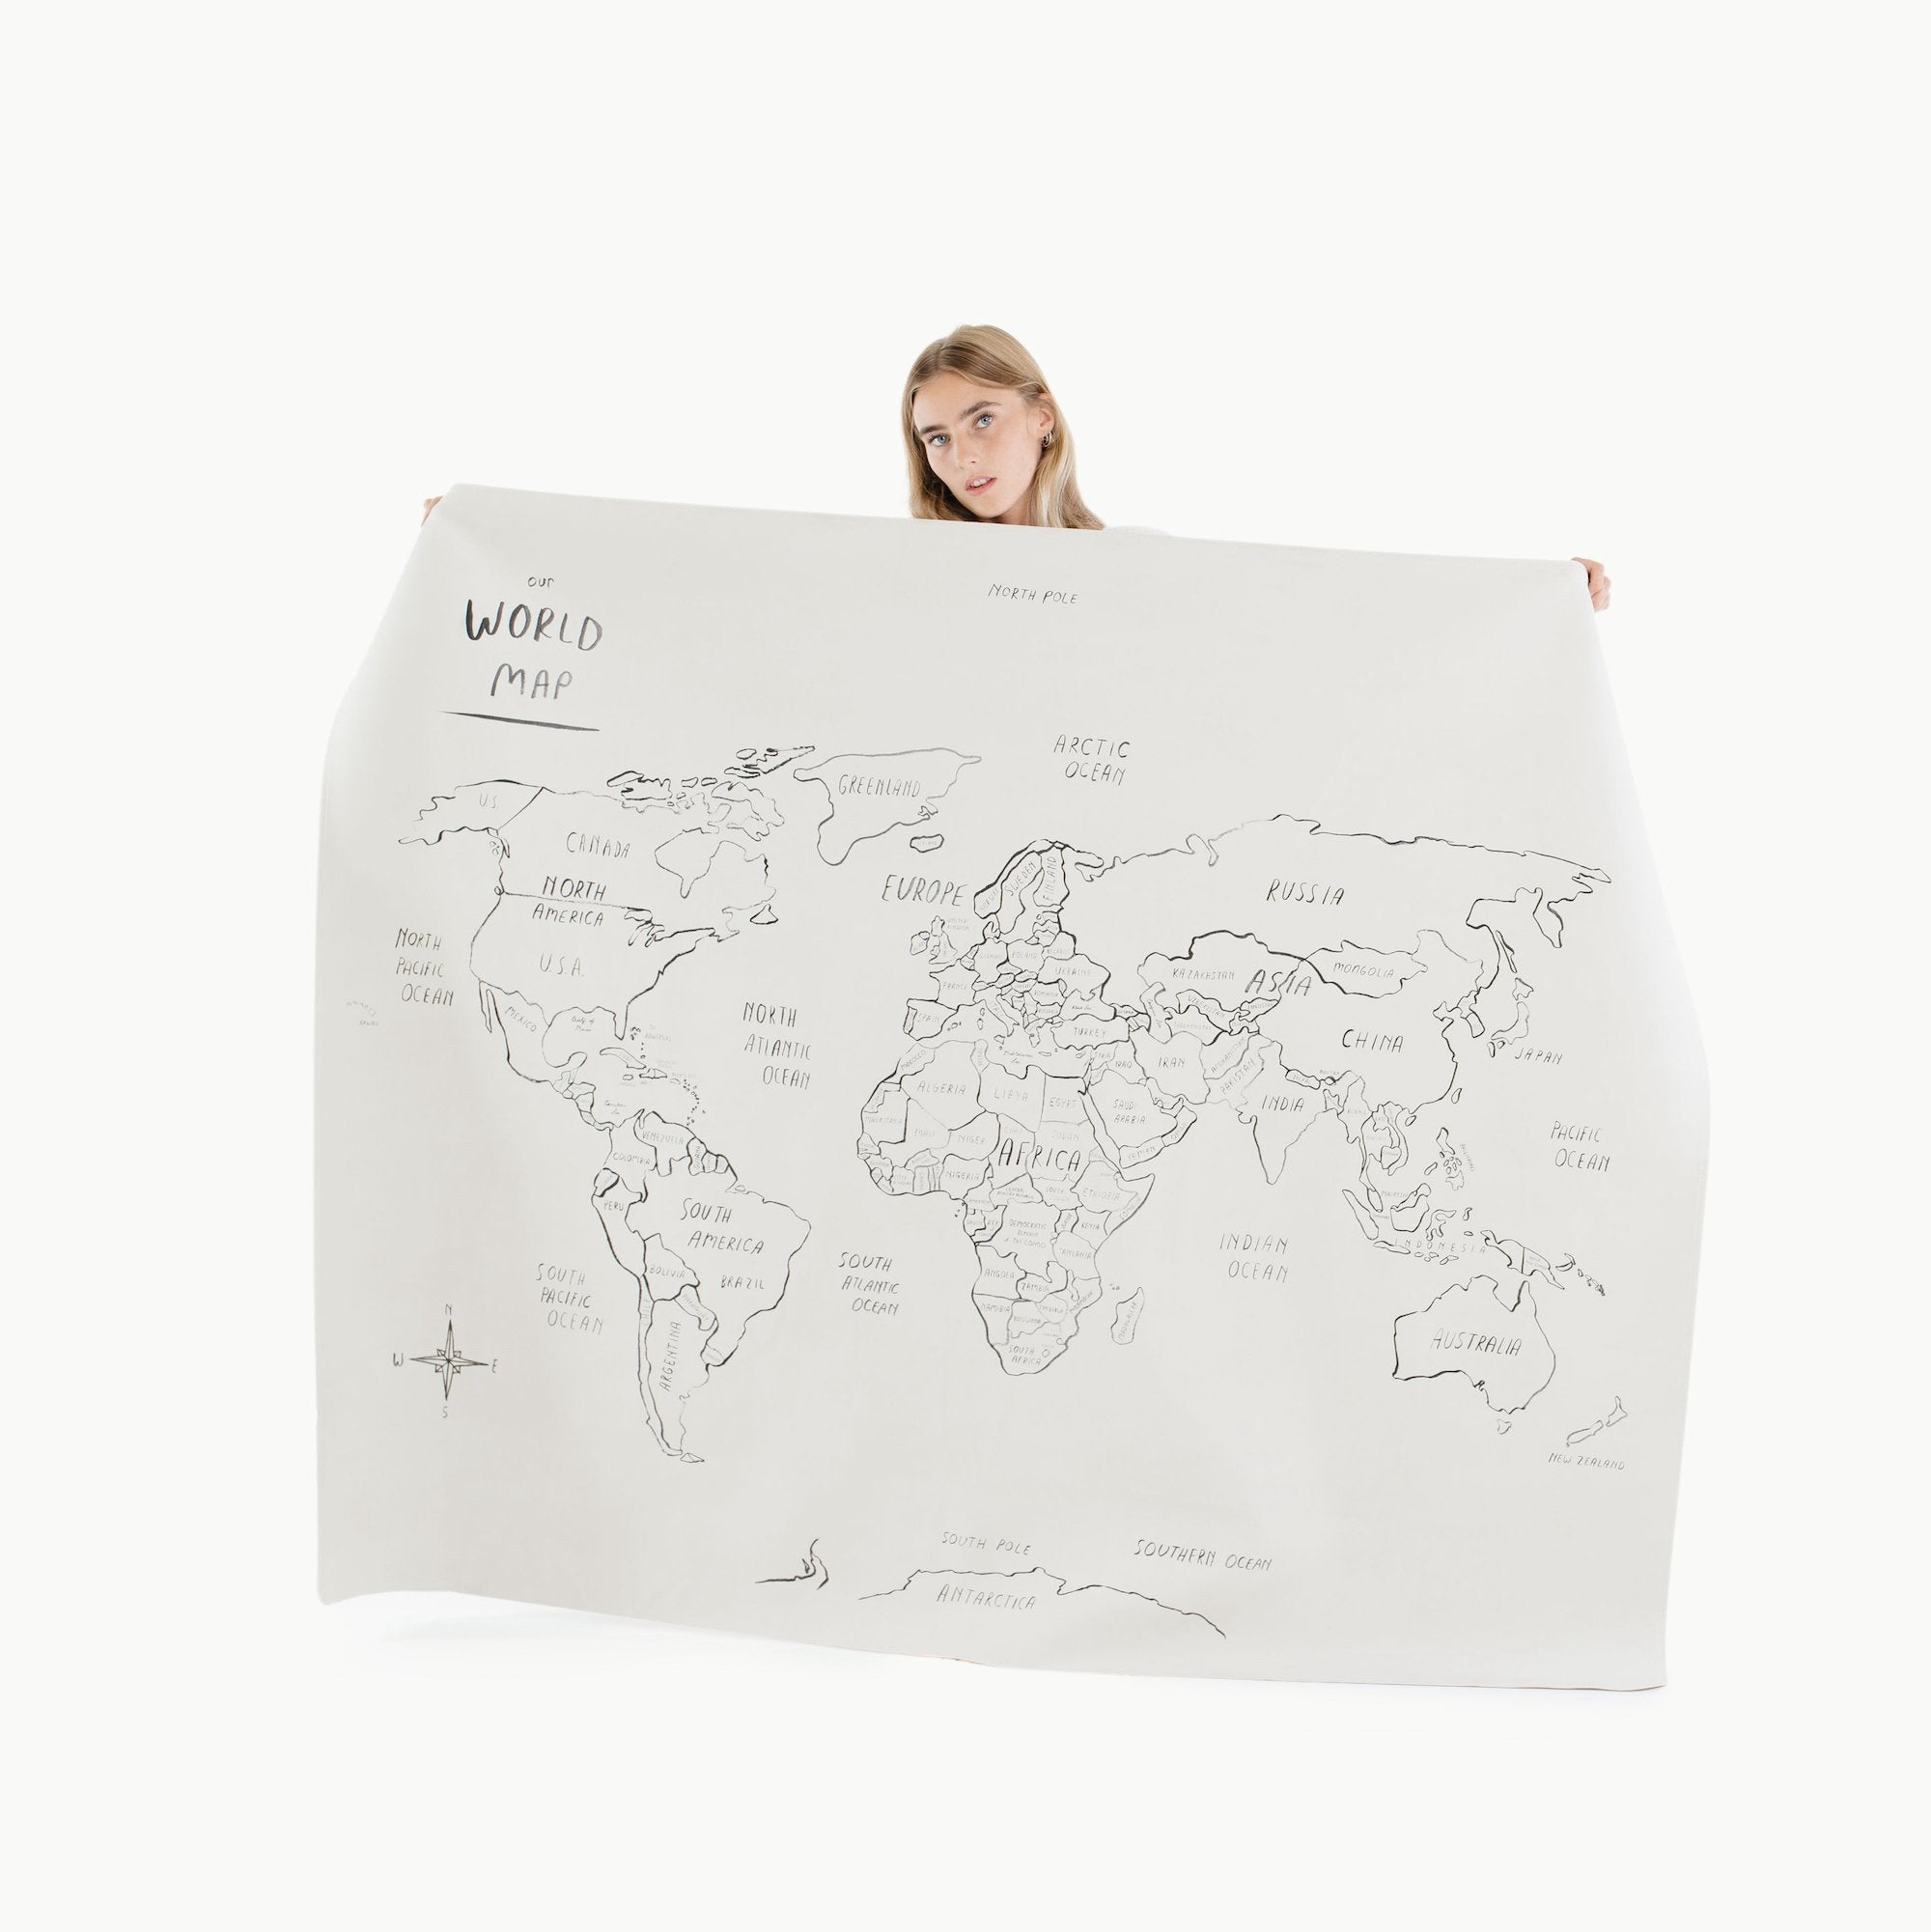 World Map@Woman holding the Midi+ World Map